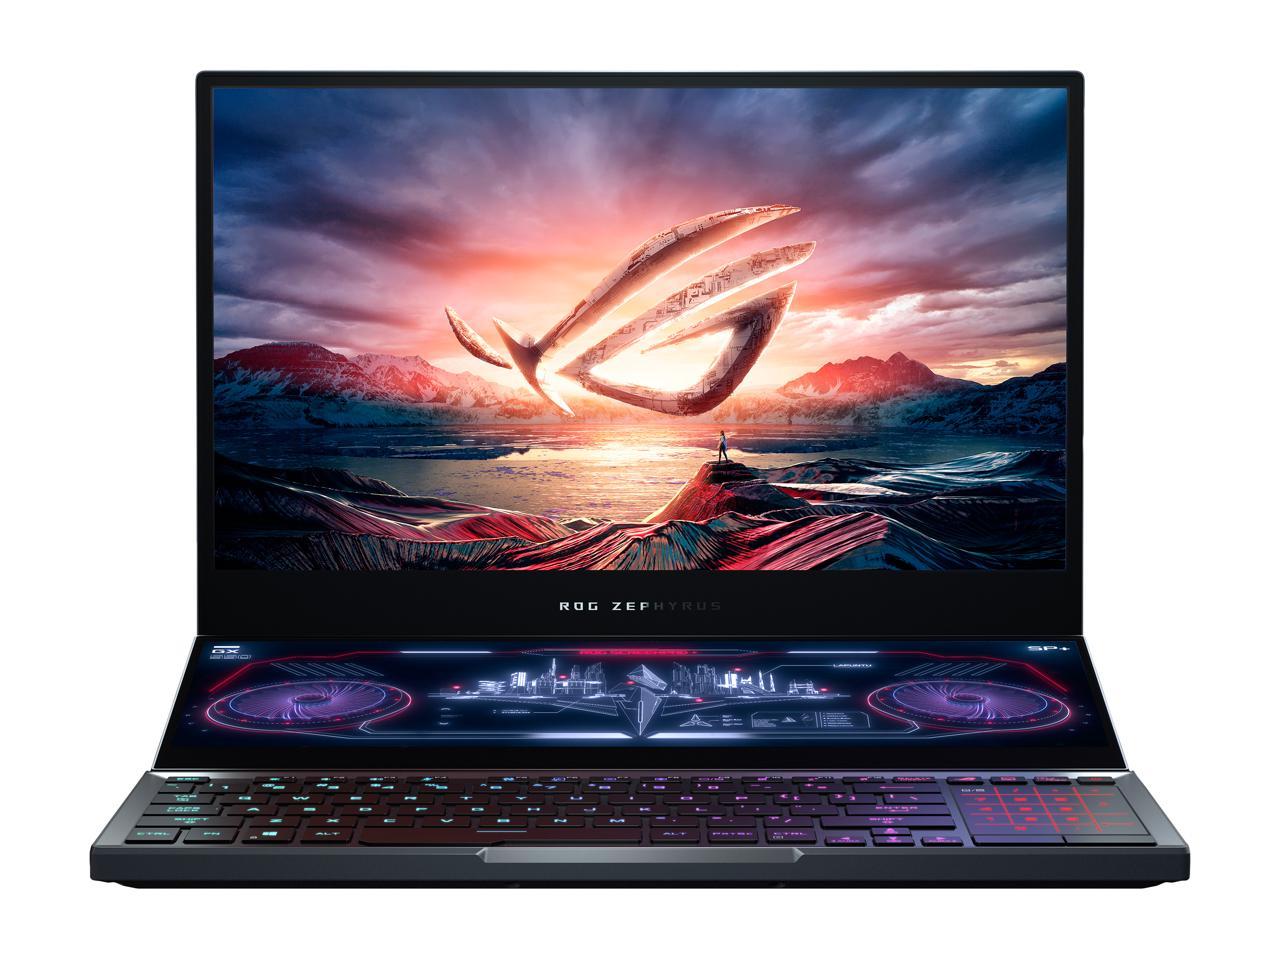 ASUS ROG Zephyrus Duo 15 - 15.6" 300 Hz - GeForce RTX 2070 SUPER - Intel Core i7-10875H - 32 GB DDR4 - 2 TB RAID 0 SSD - Per-Key RGB - Thunderbolt 3 - Windows 10 - Gaming Laptop (GX550LWS-XS79)